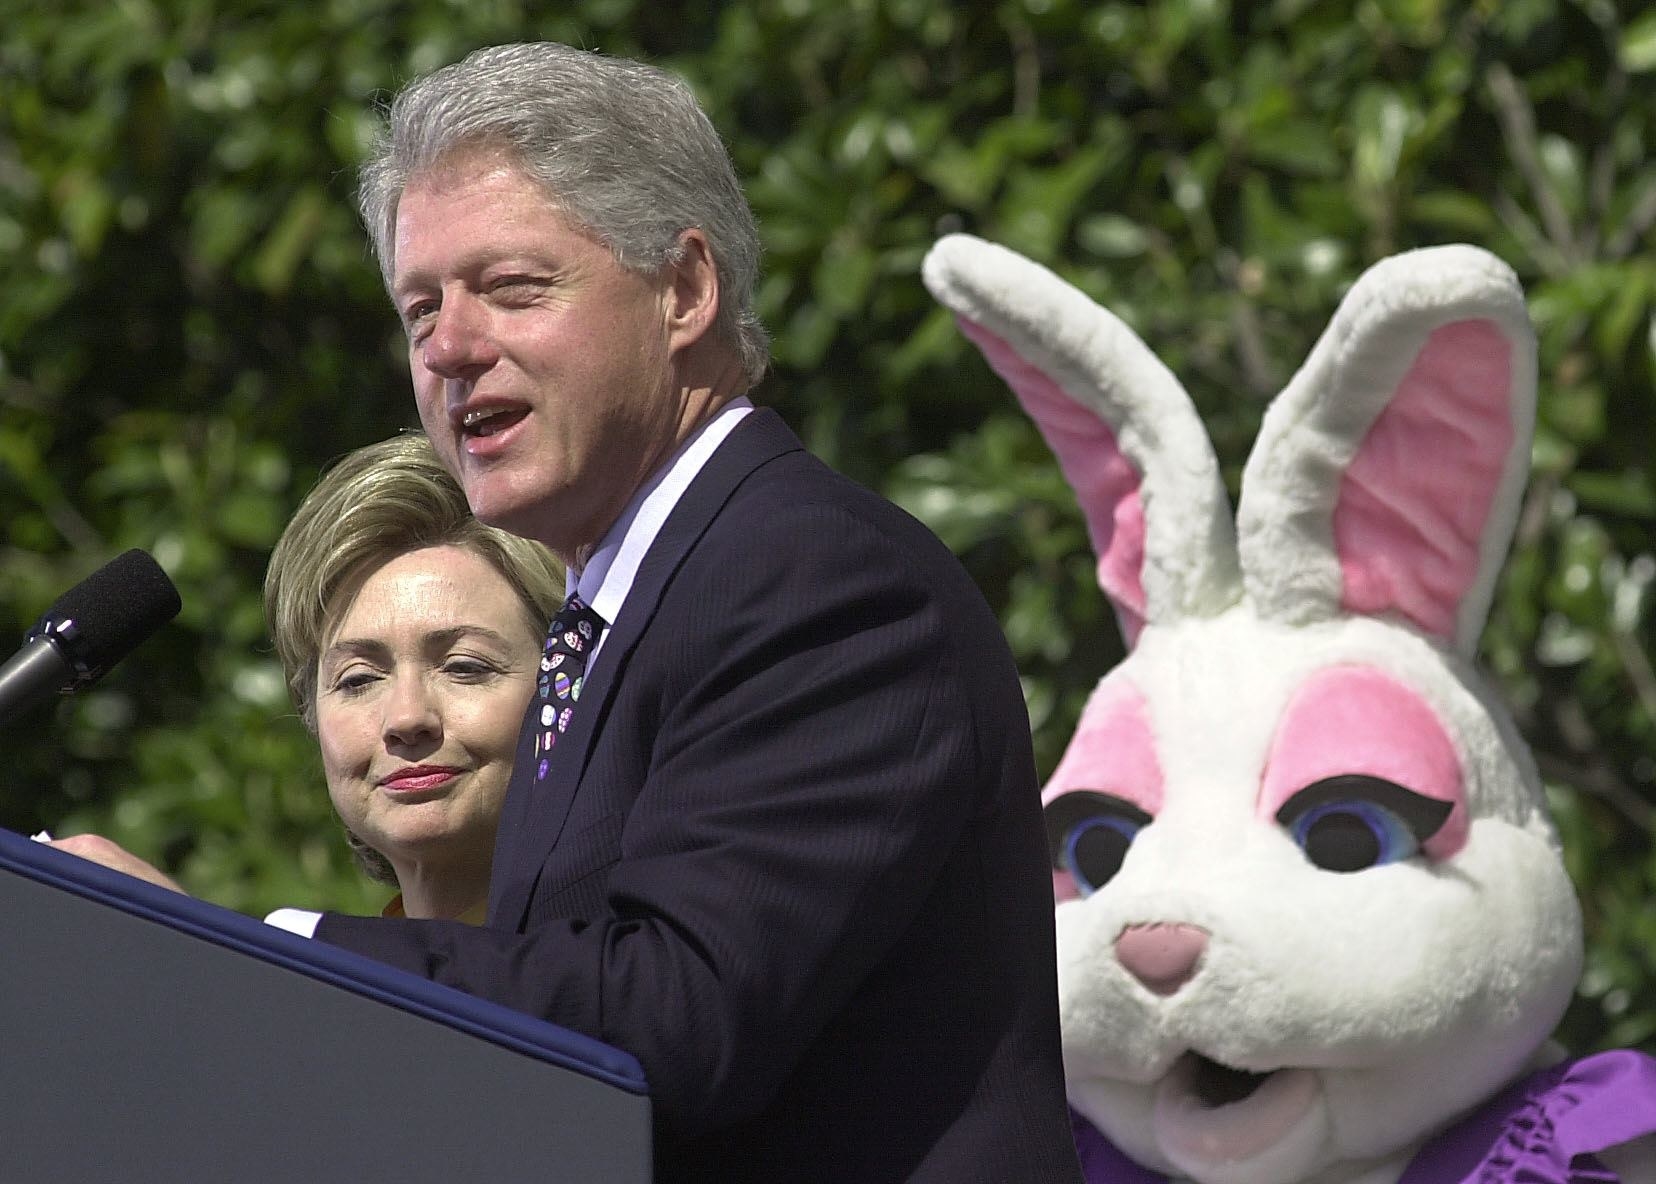 Pink Bunny watches Bill Clinton speak